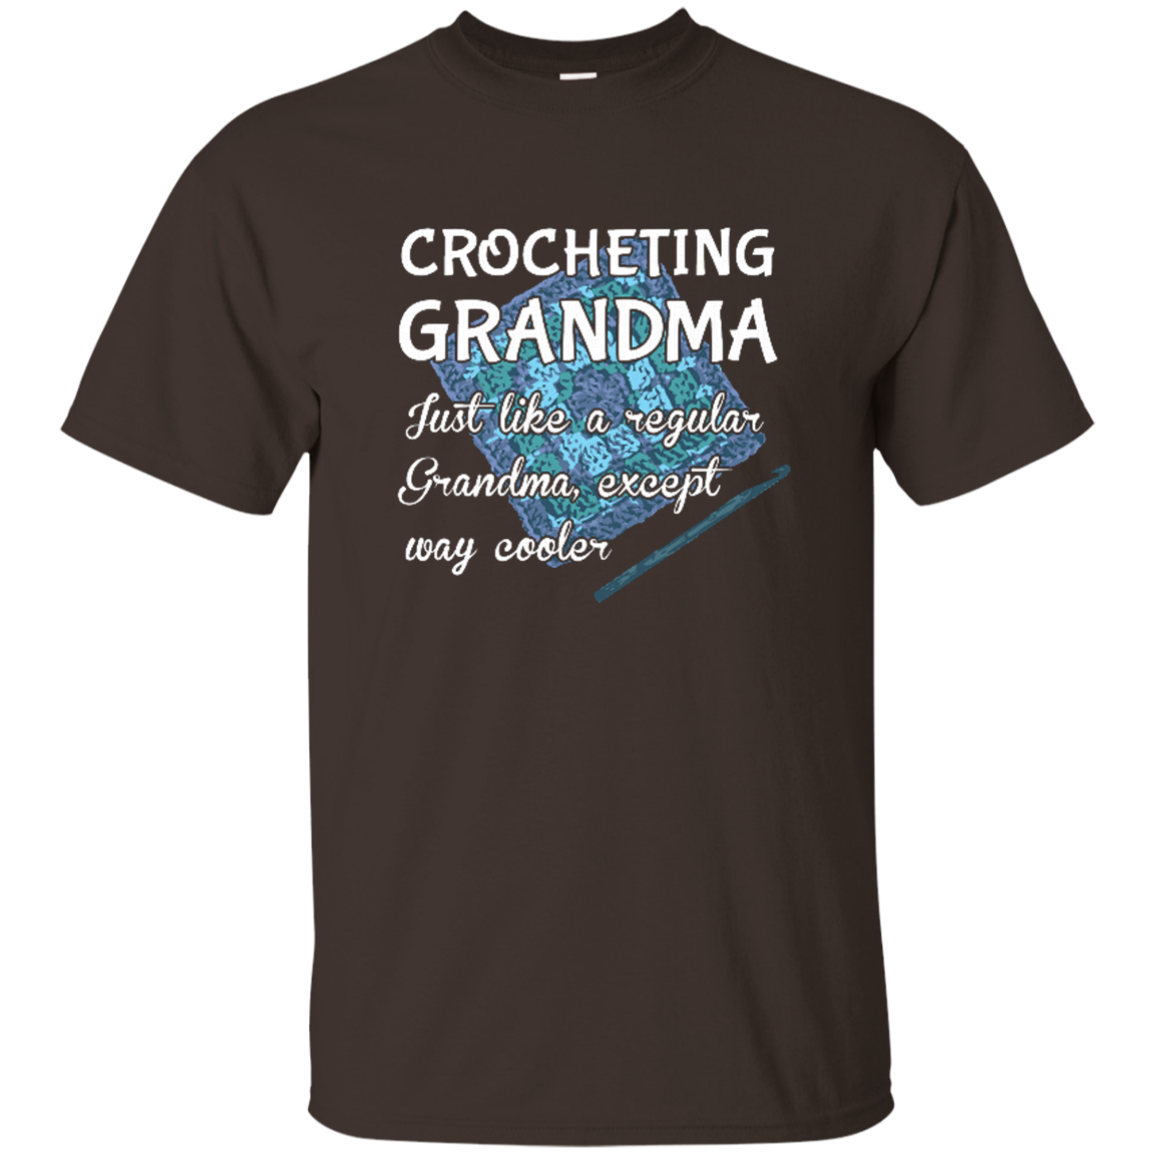 Crocheting Grandma Ultra Cotton T-Shirt